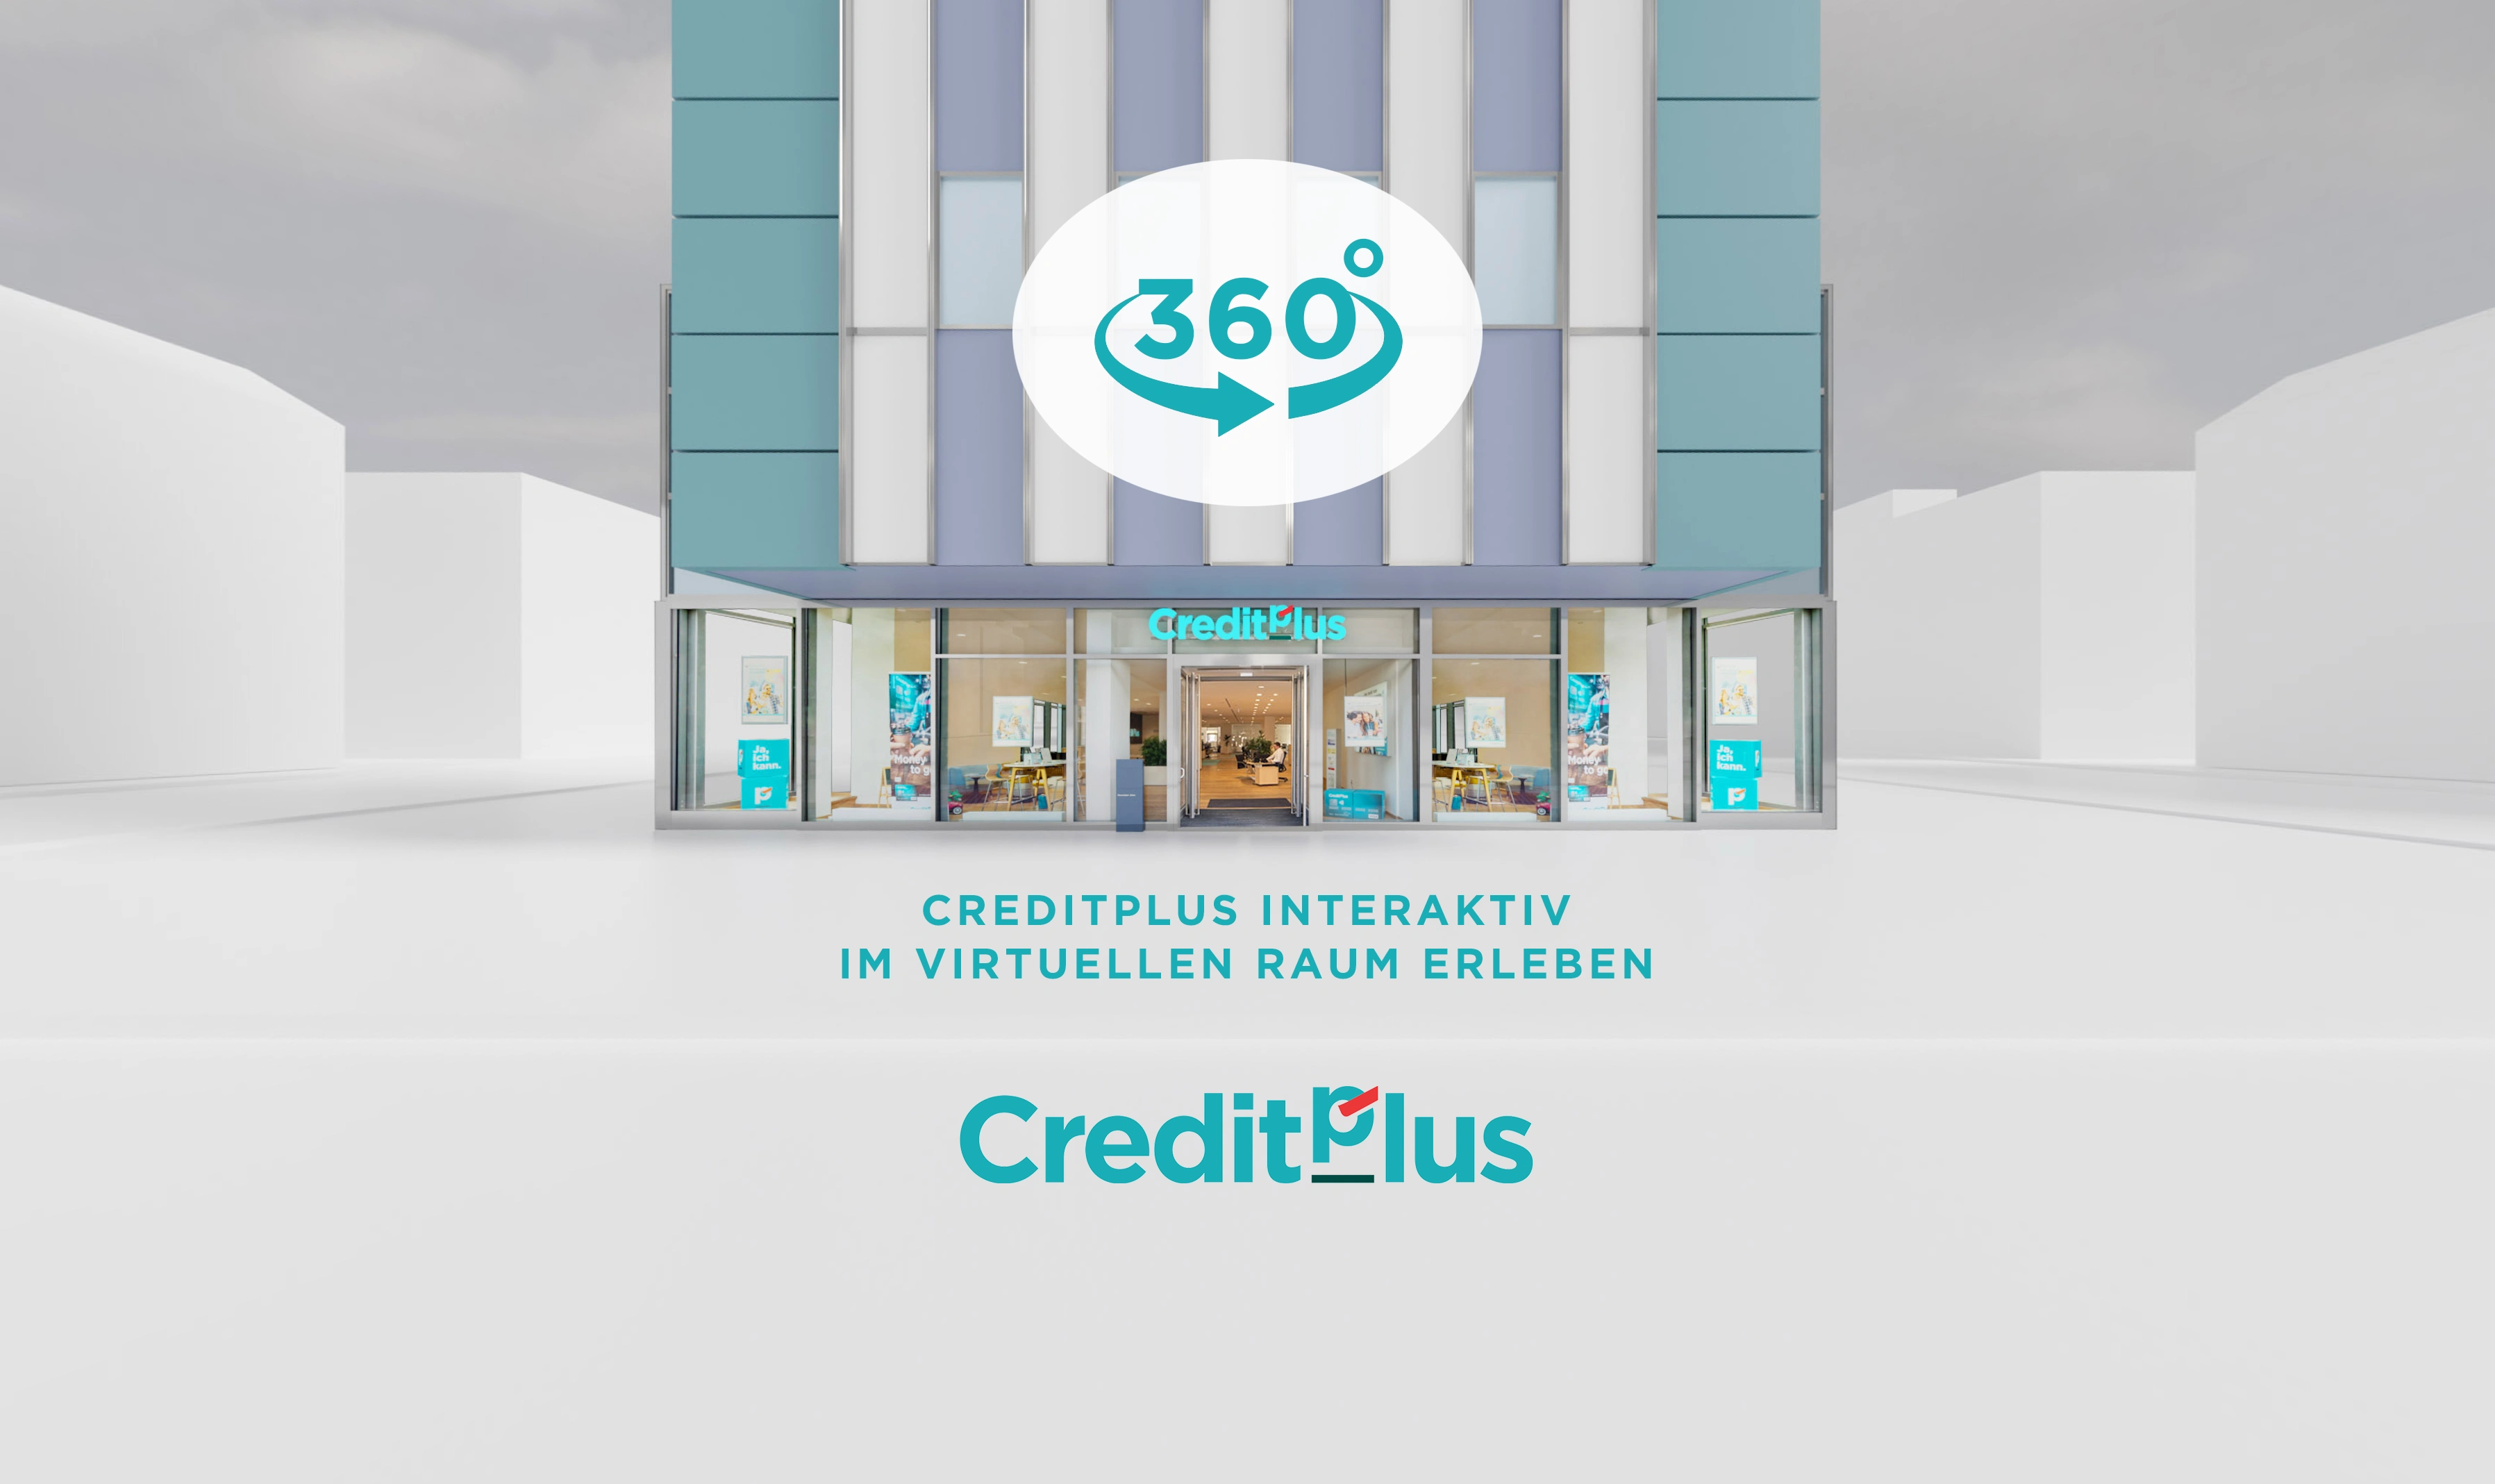 Creditplus goes Virtual Reality